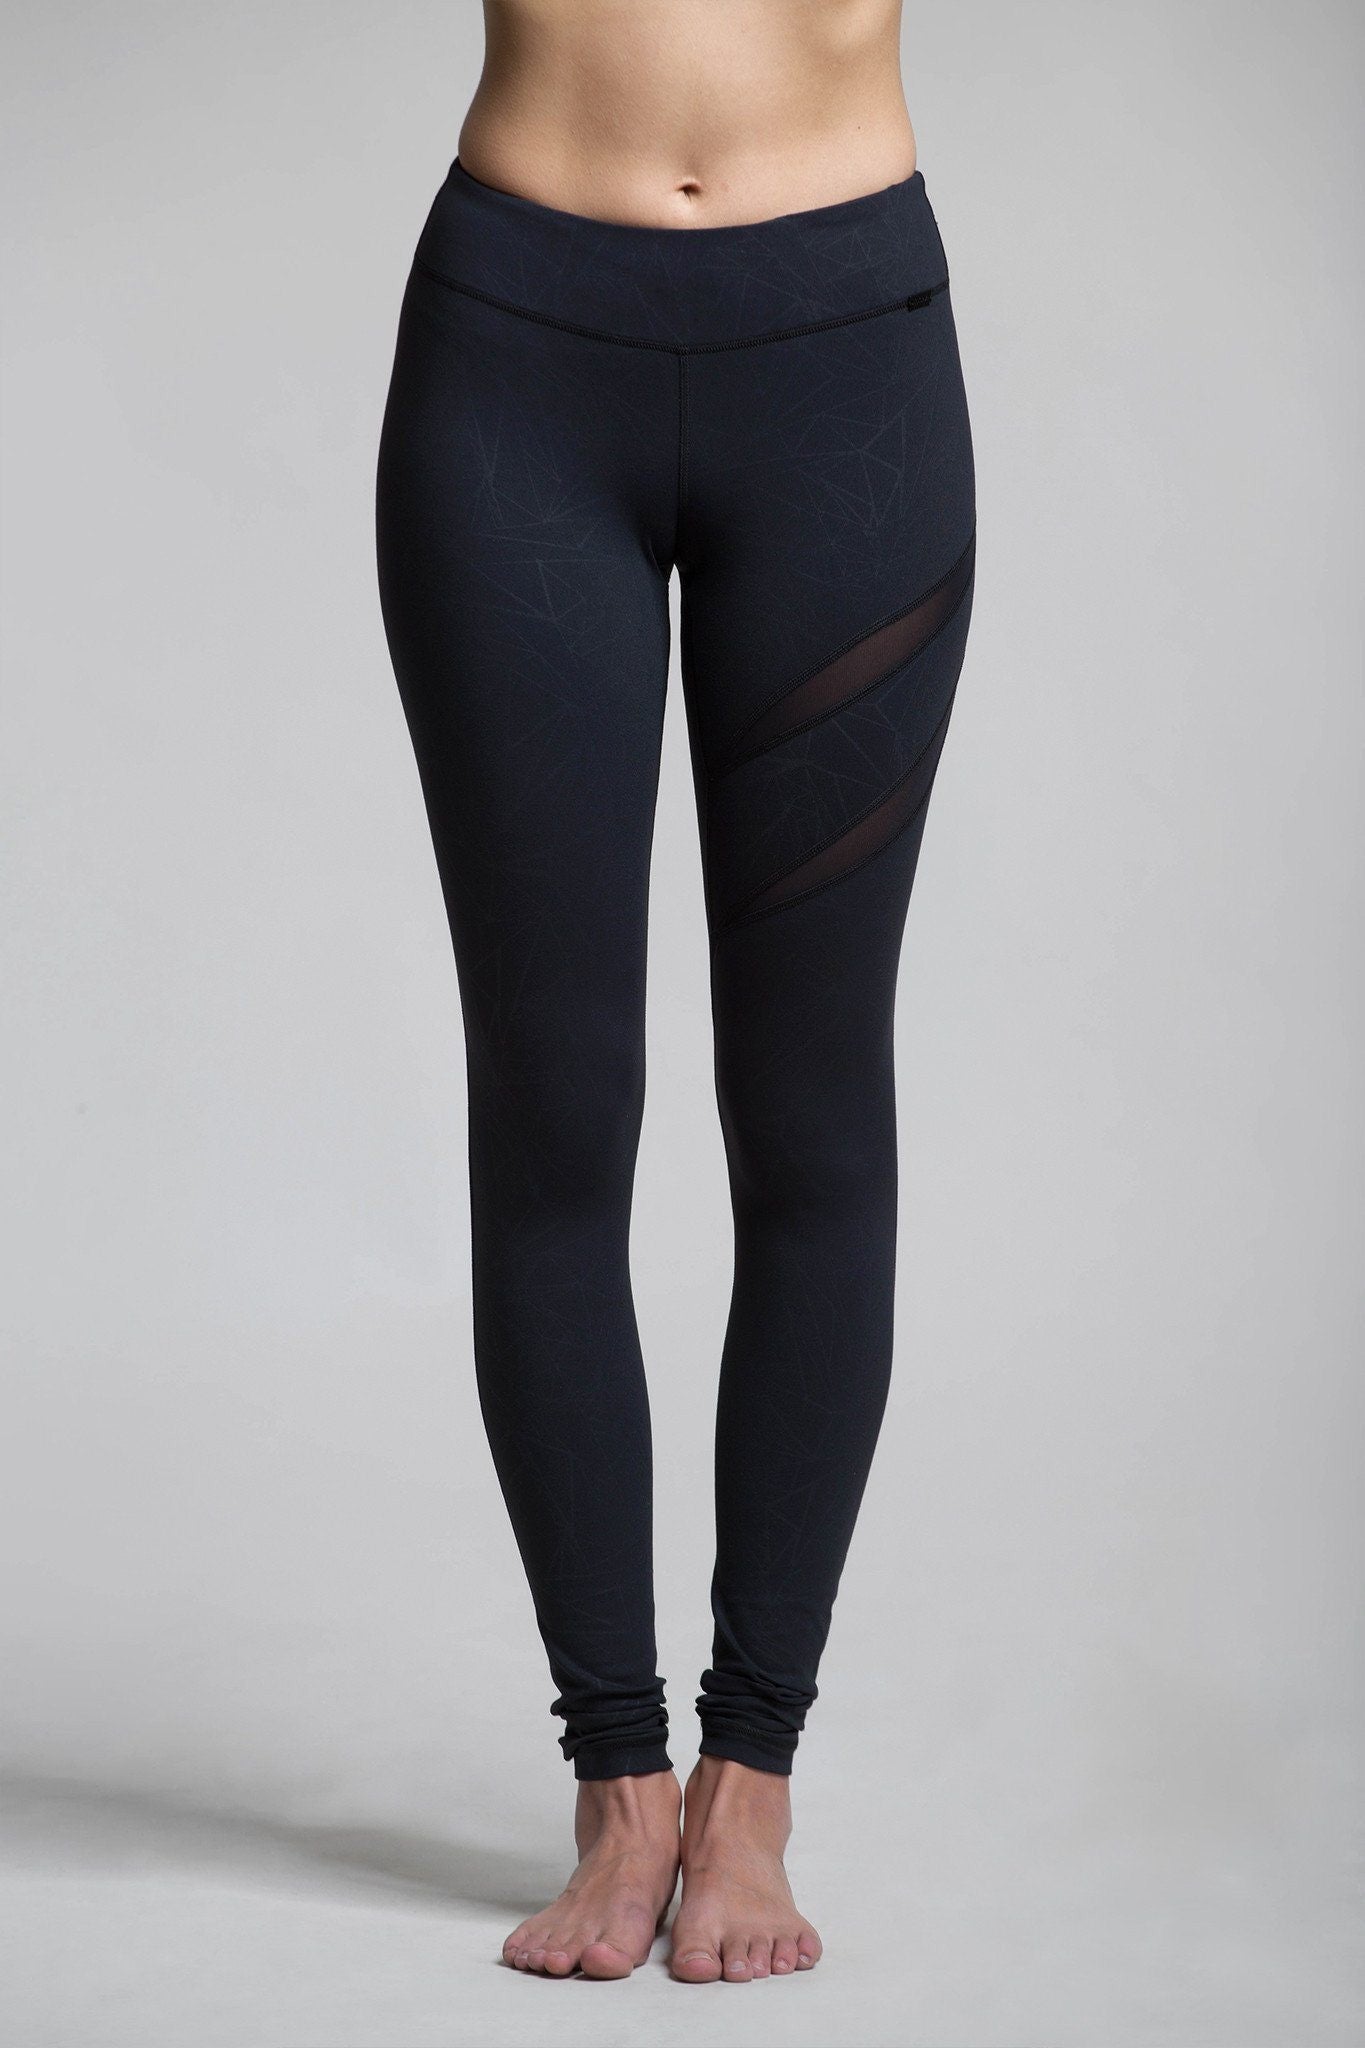 lululemon black leggings with mesh｜TikTok Search